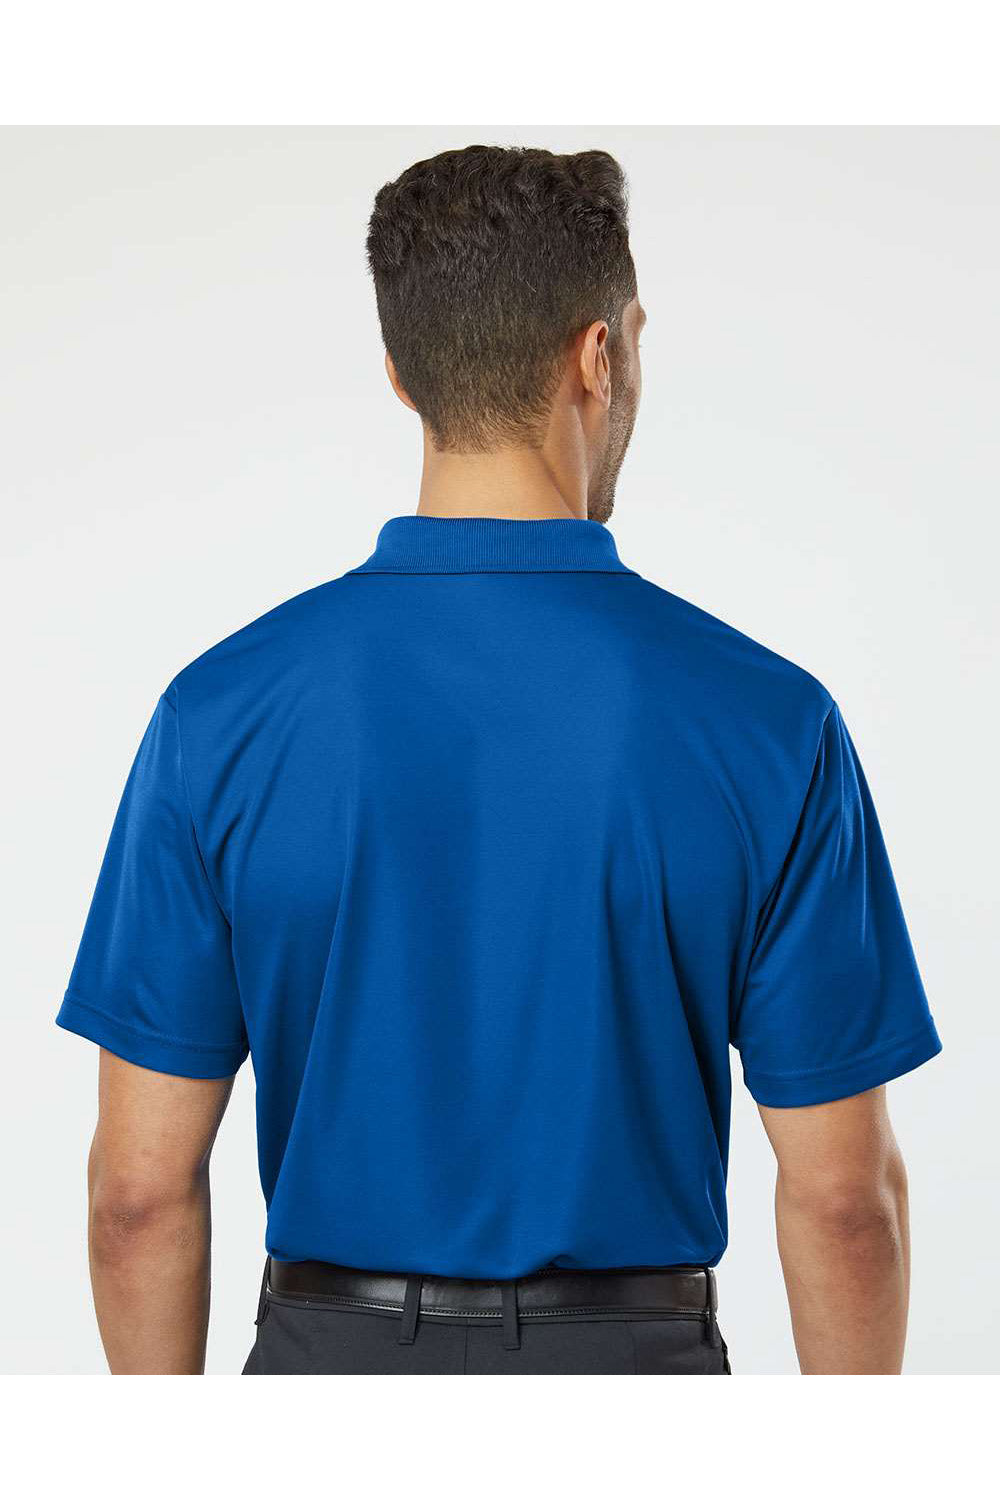 Paragon 500 Mens Sebring Performance Short Sleeve Polo Shirt Deep Royal Blue Model Back